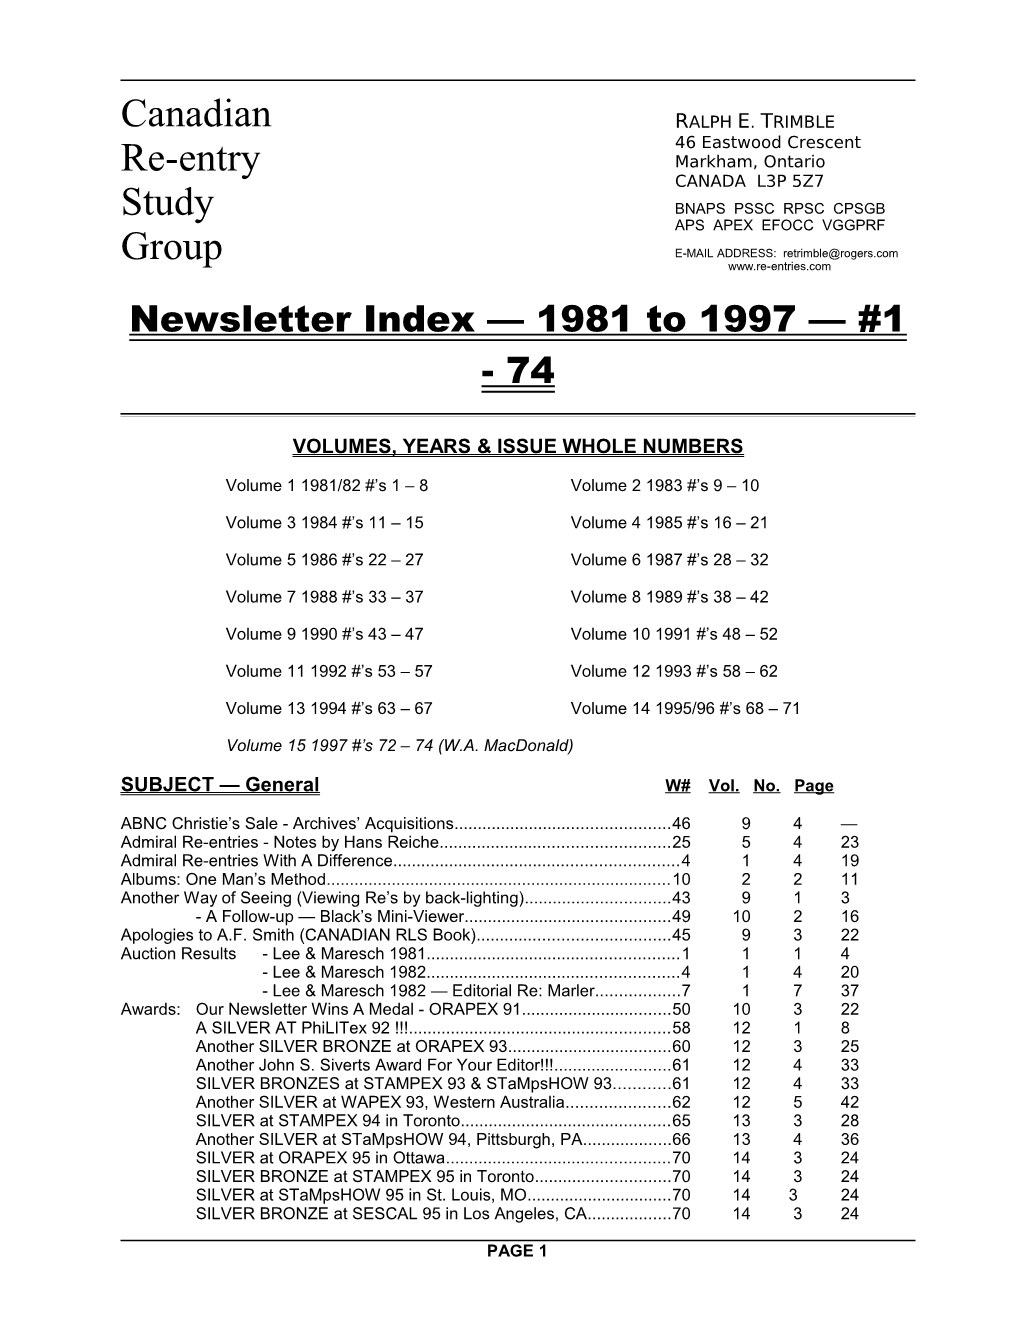 CRSG Newsletter Index W# Vol. No. Page